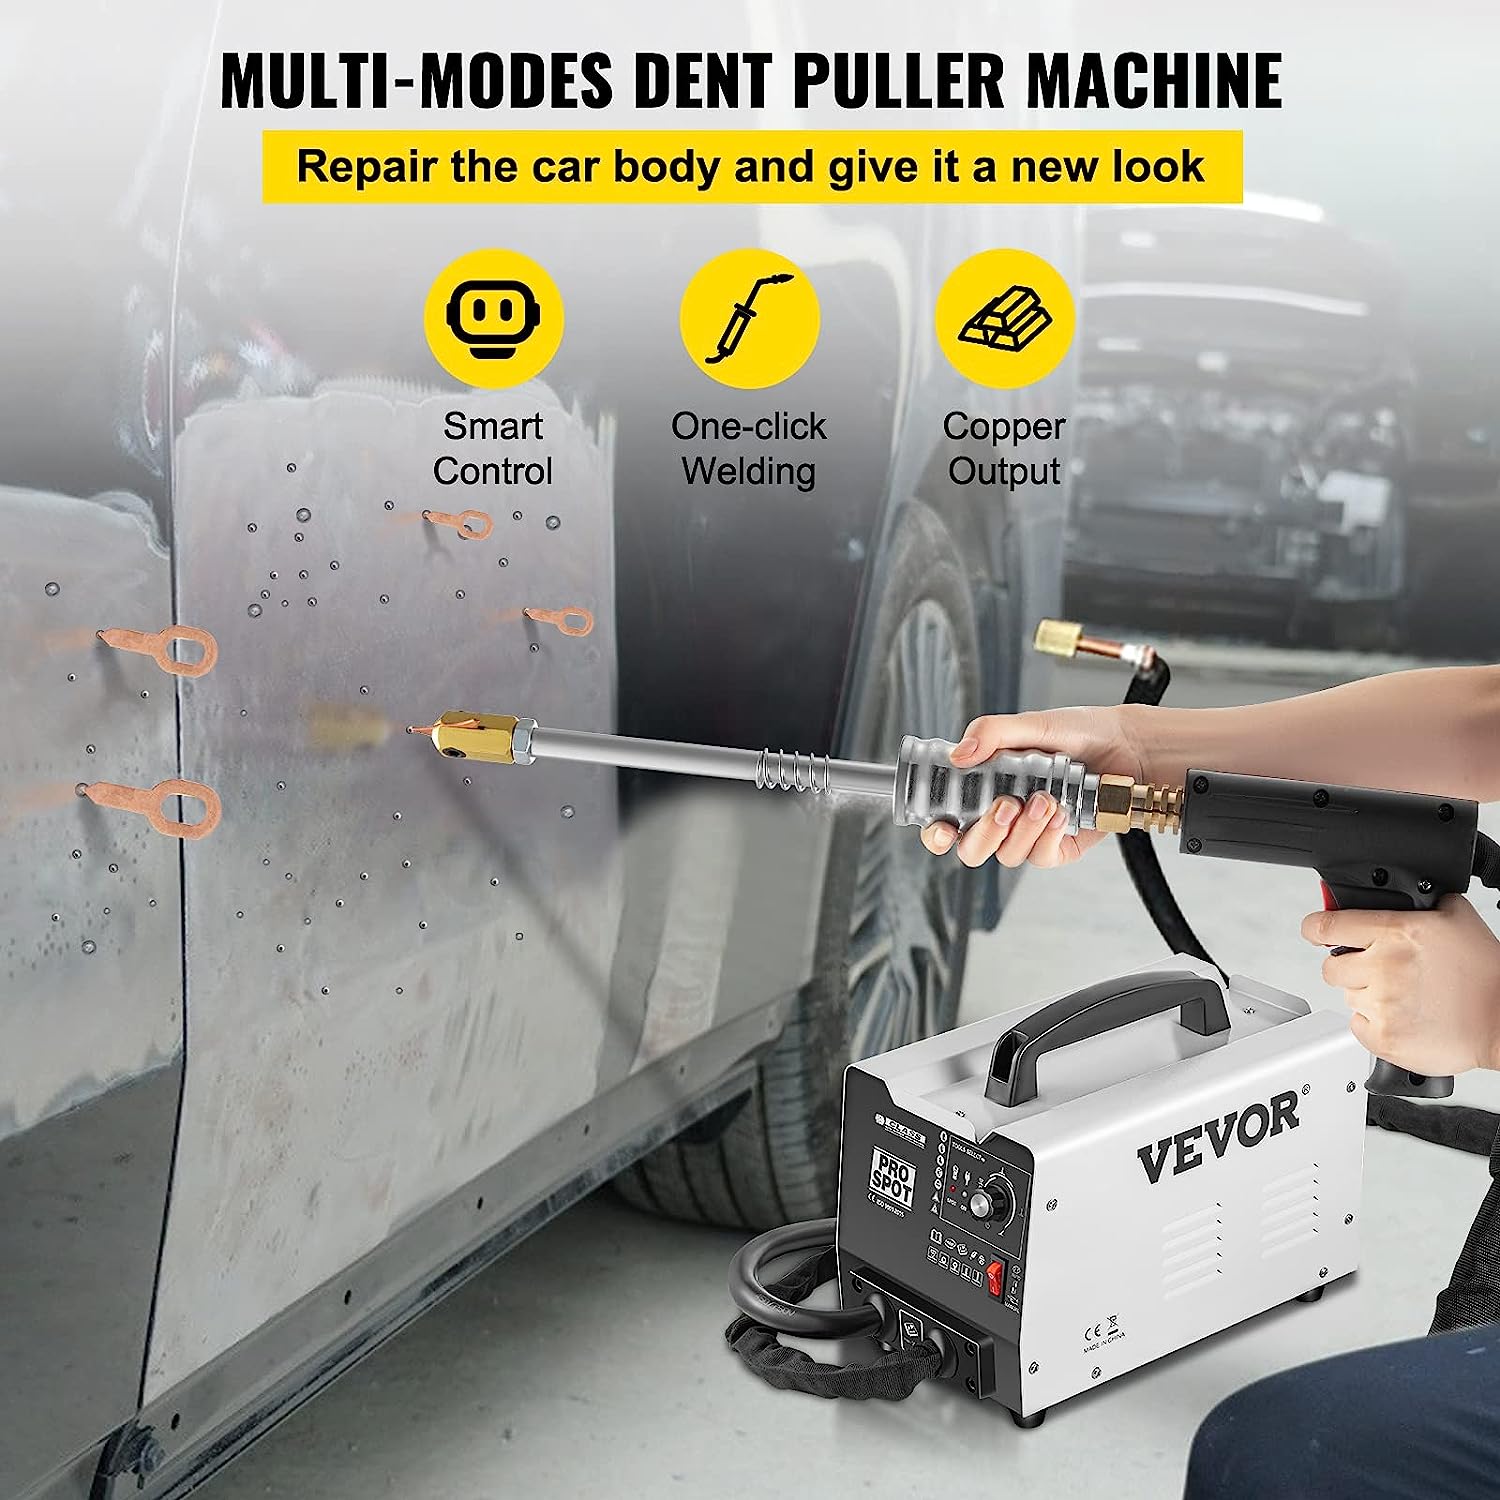 VEVOR Dent Puller Machine, 1.8KW Spot Dent Puller - $170